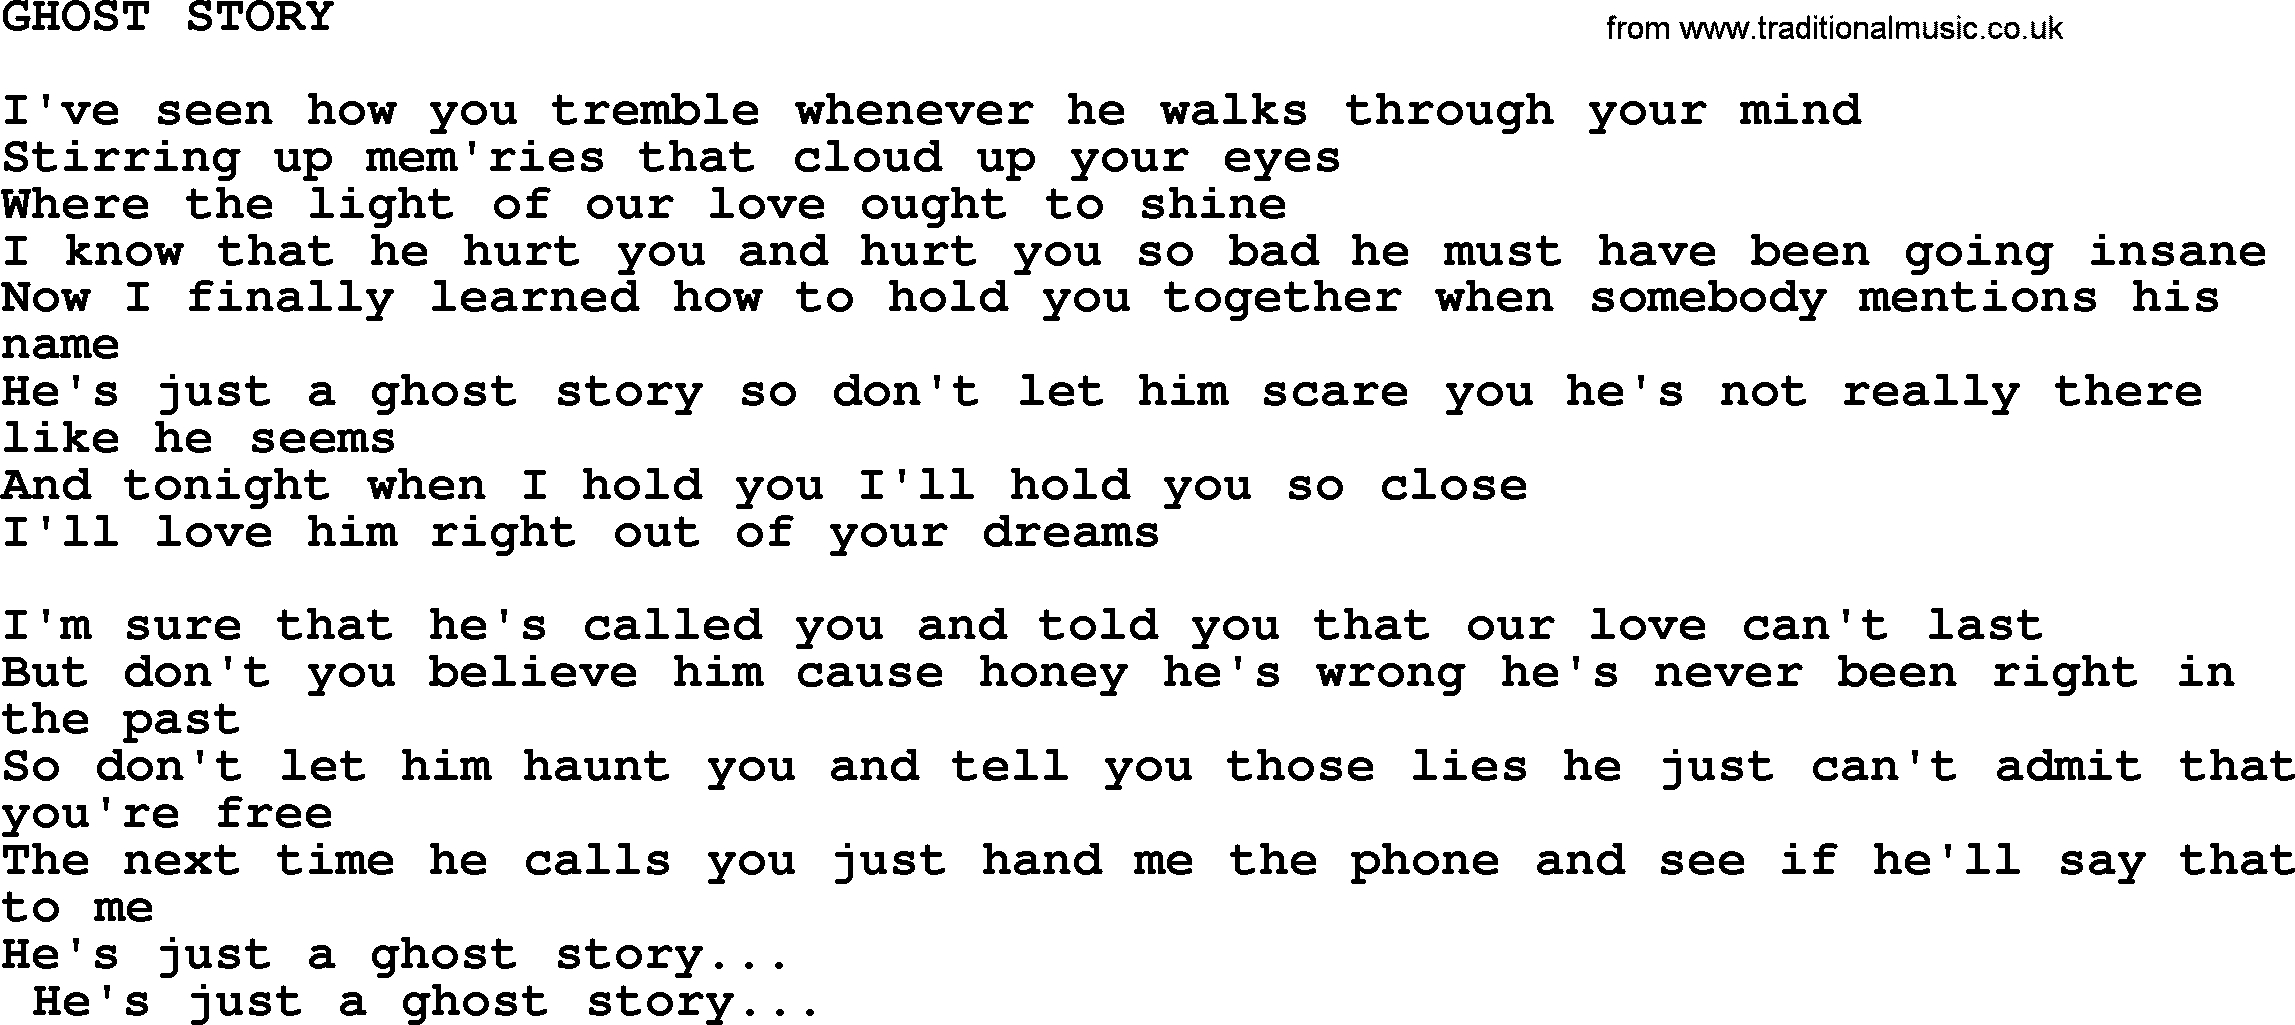 Merle Haggard song: Ghost Story, lyrics.